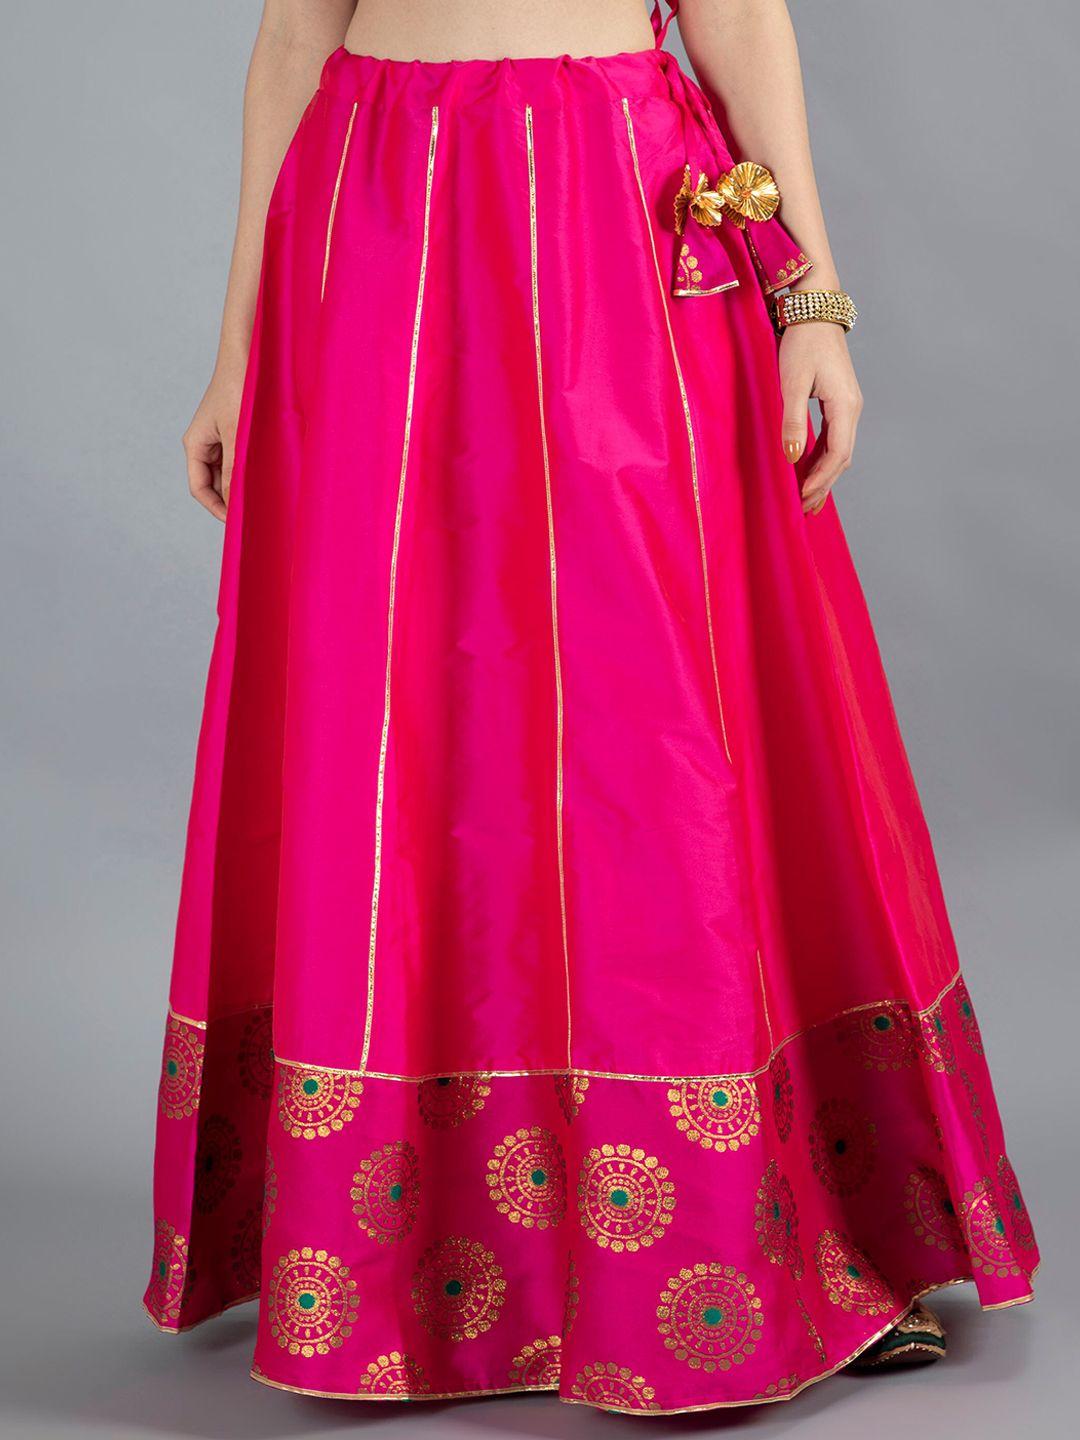 neudis-women-pink-&-gold-toned-embellished-maxi-skirts